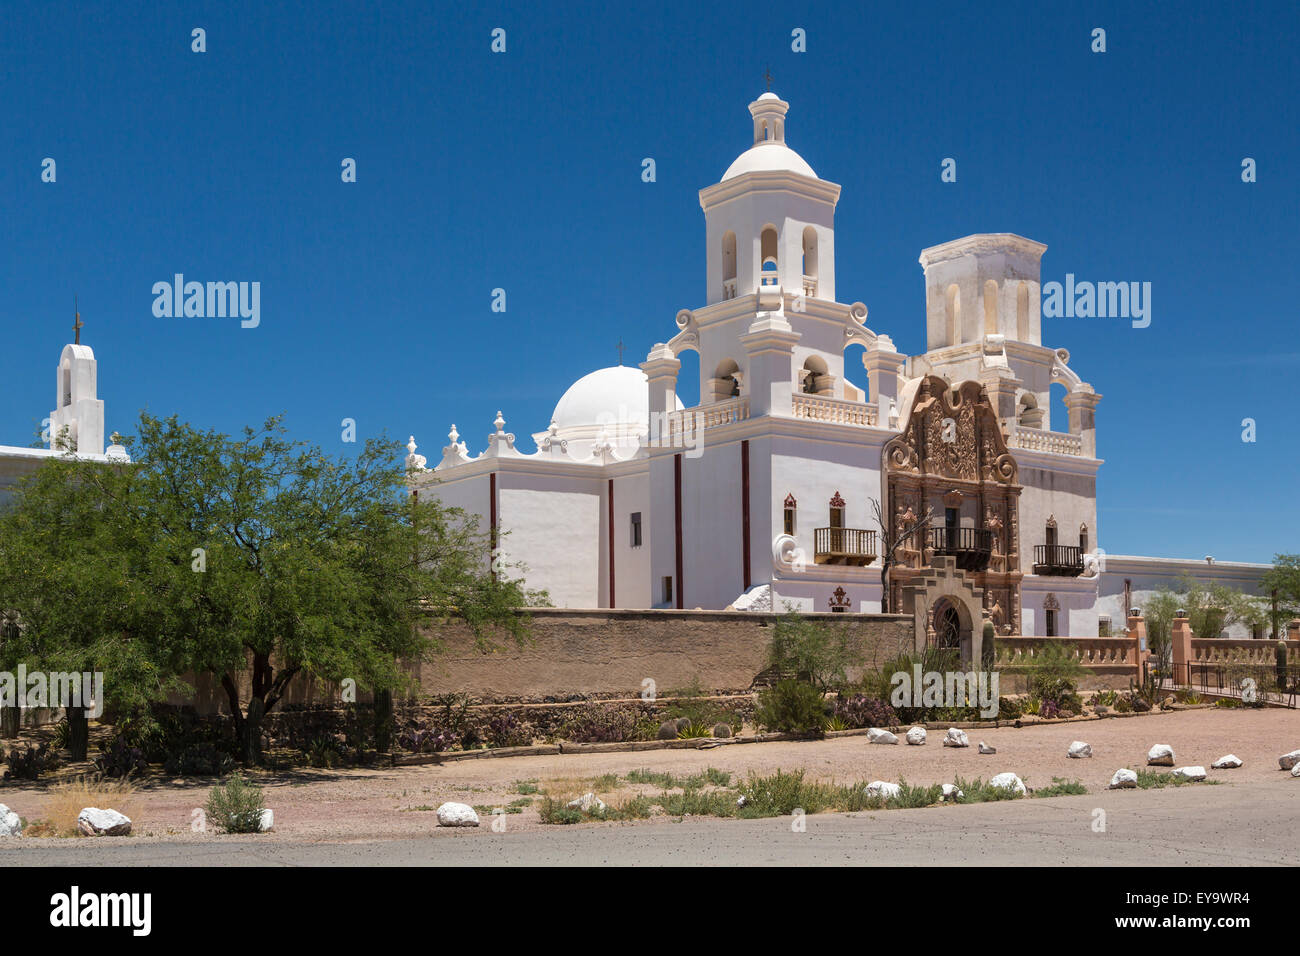 The historic Spanish Mission, San Xavier del Bac near Tucson, Arizona, USA. Stock Photo